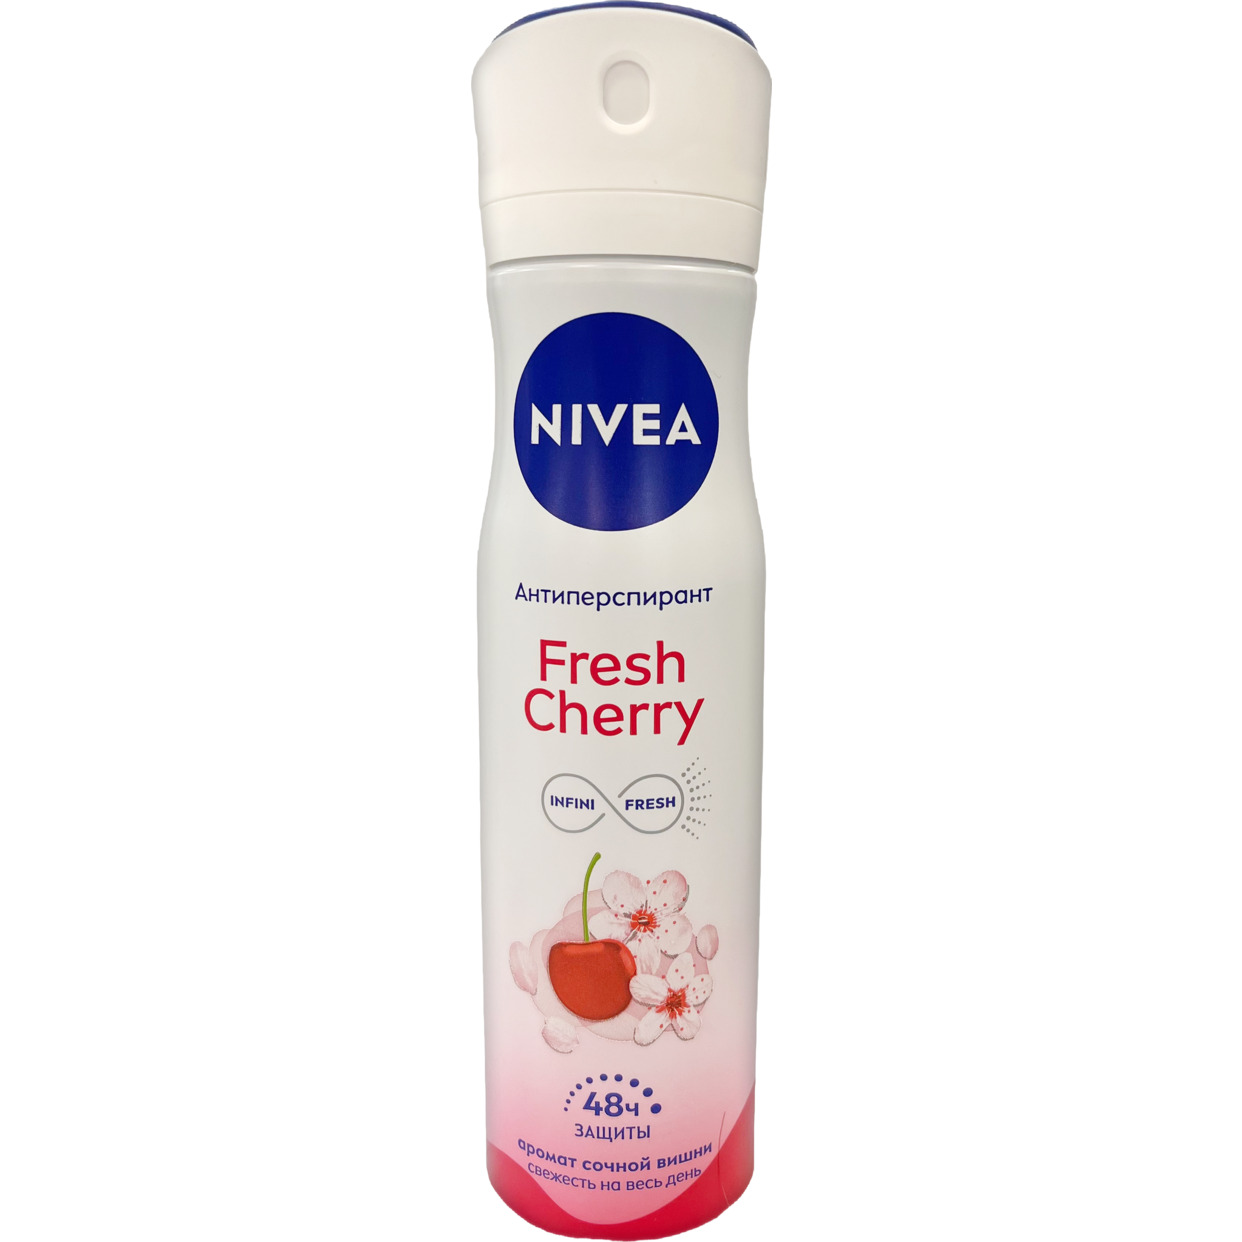 Антиперспирант «Fresh Cherry» марки «Nivea», 150мл